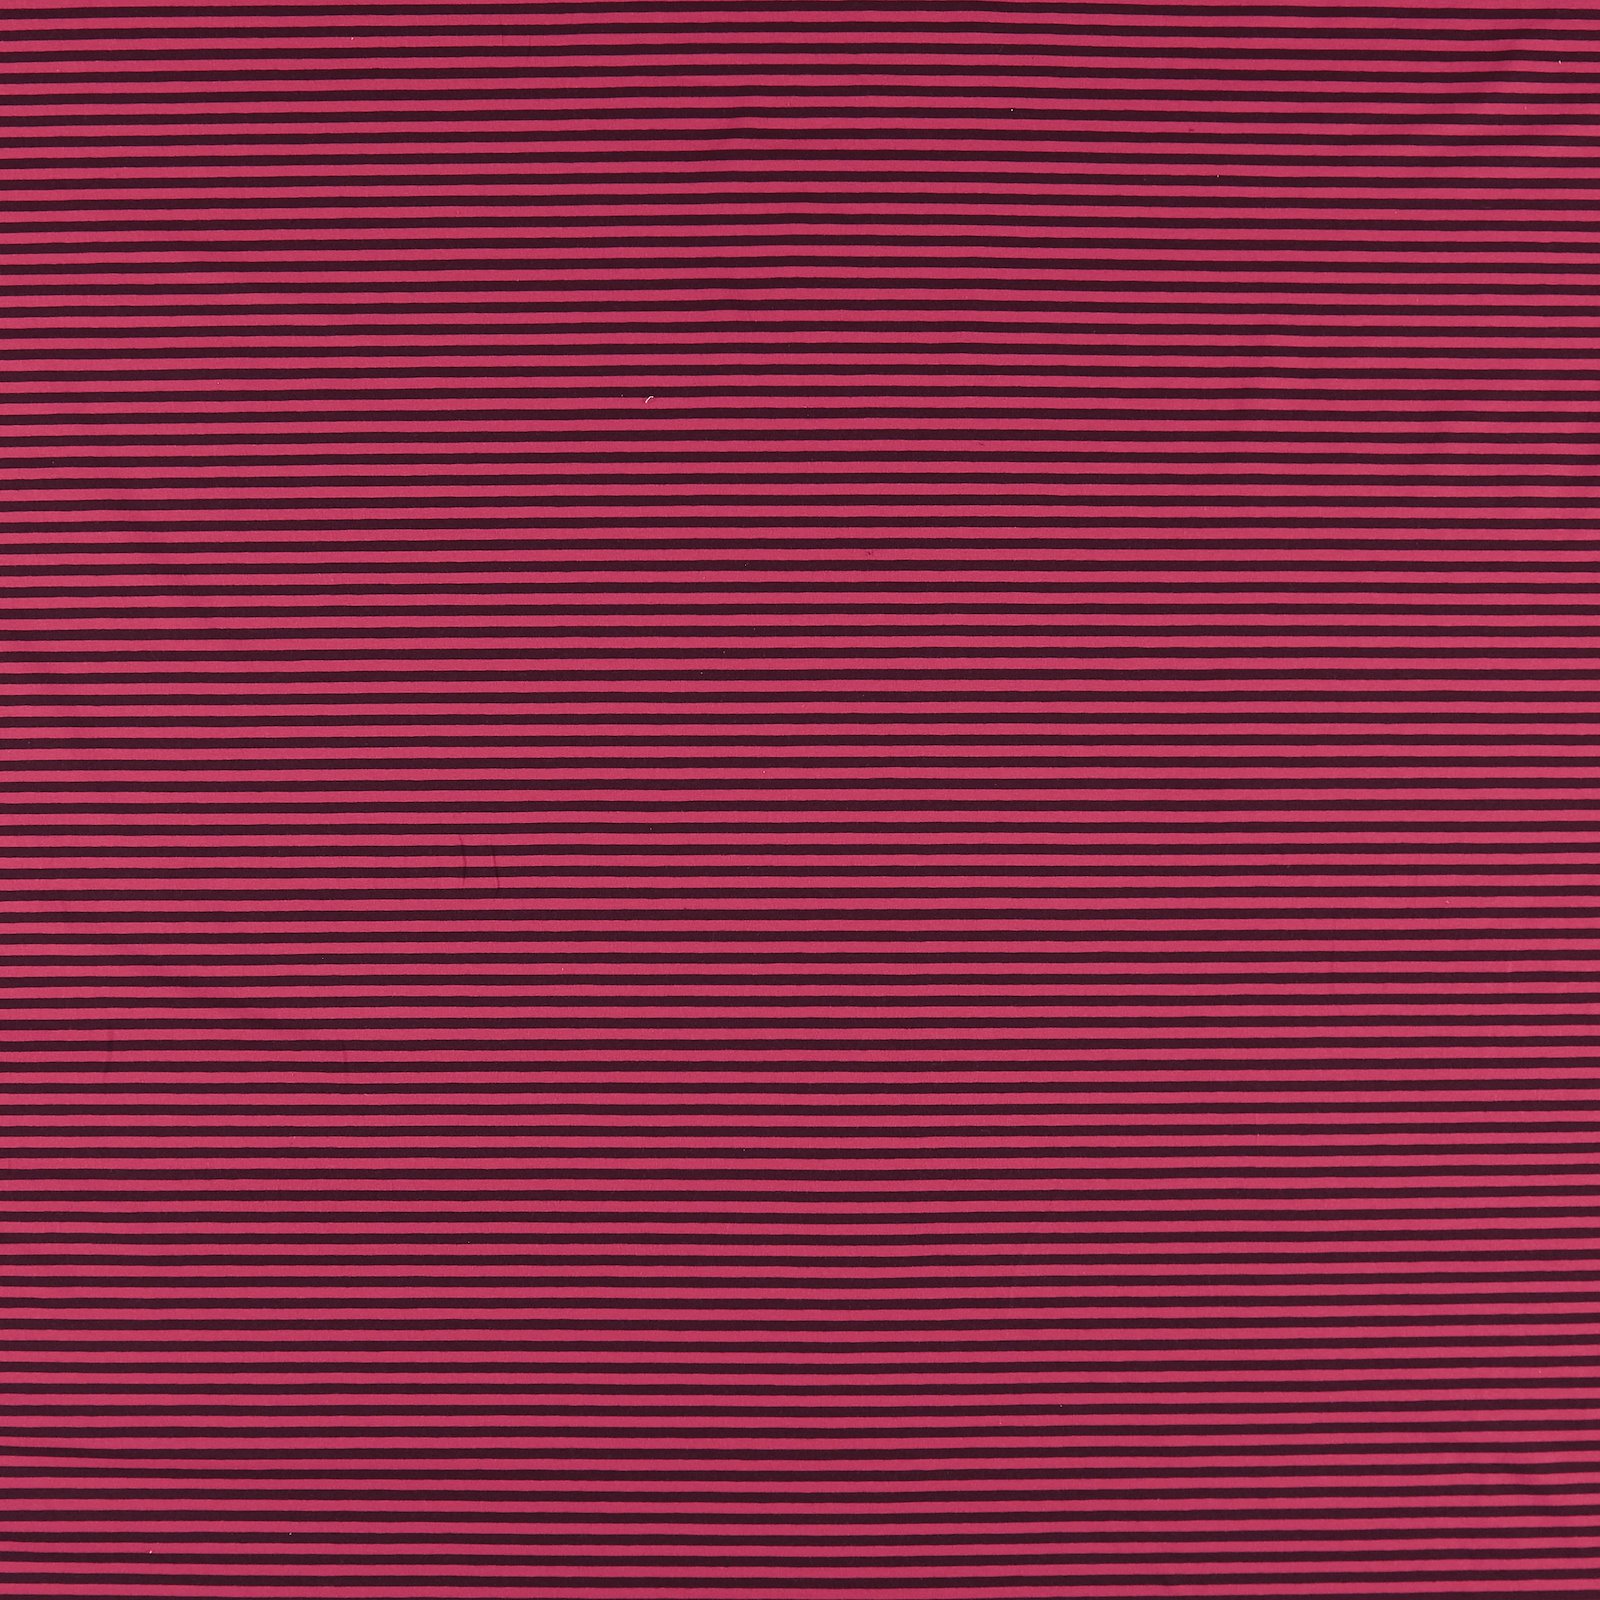 Stretch jersey YD stripe pink/aubergine 273674_pack_sp